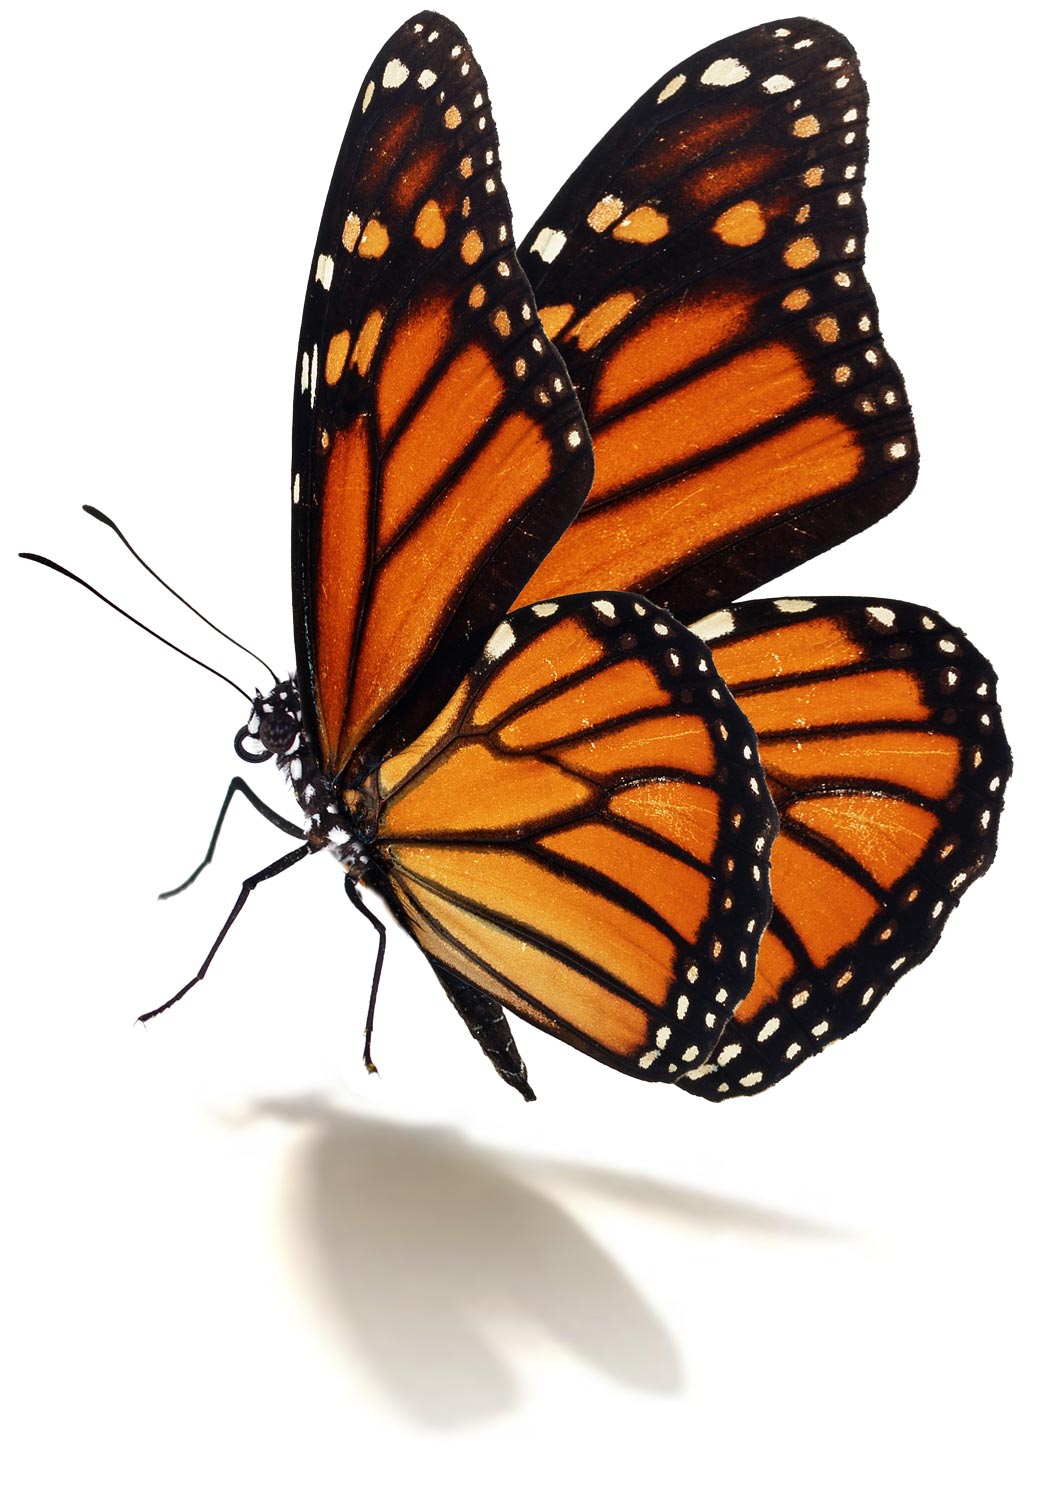 a monarch butterfly